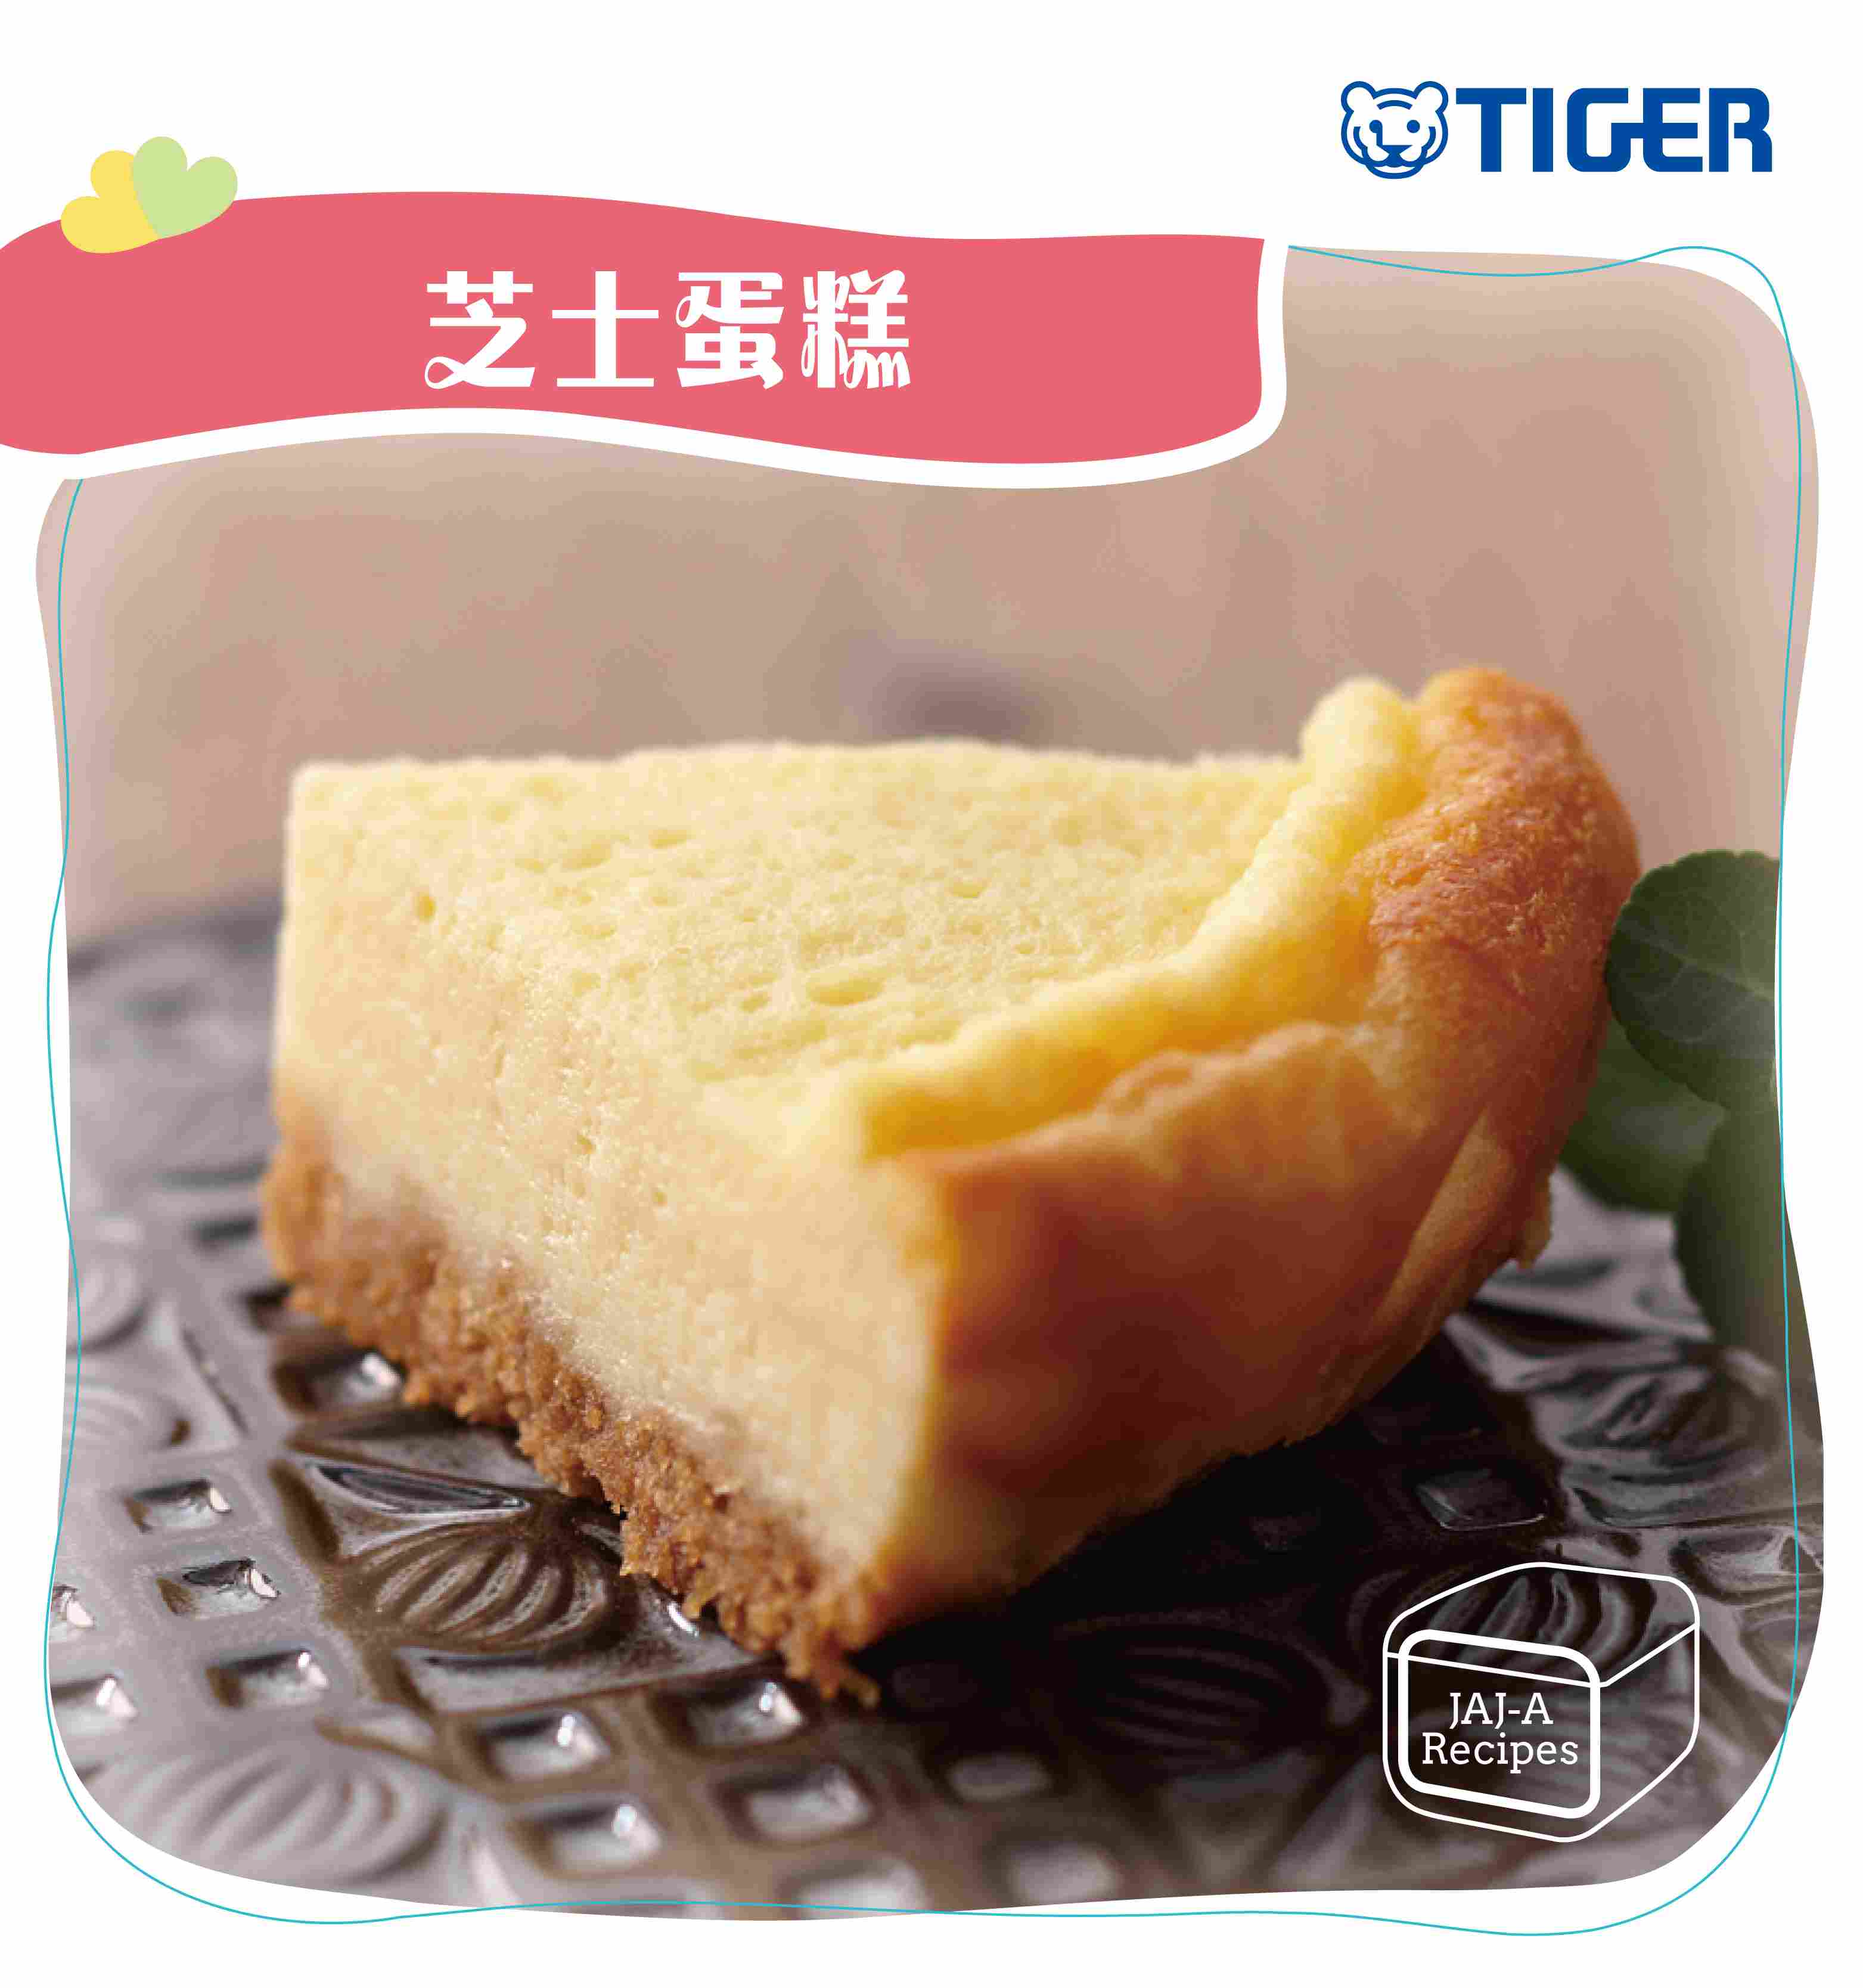 TIGER-recipe-cheesecake-ch-2.jpg (234 KB)